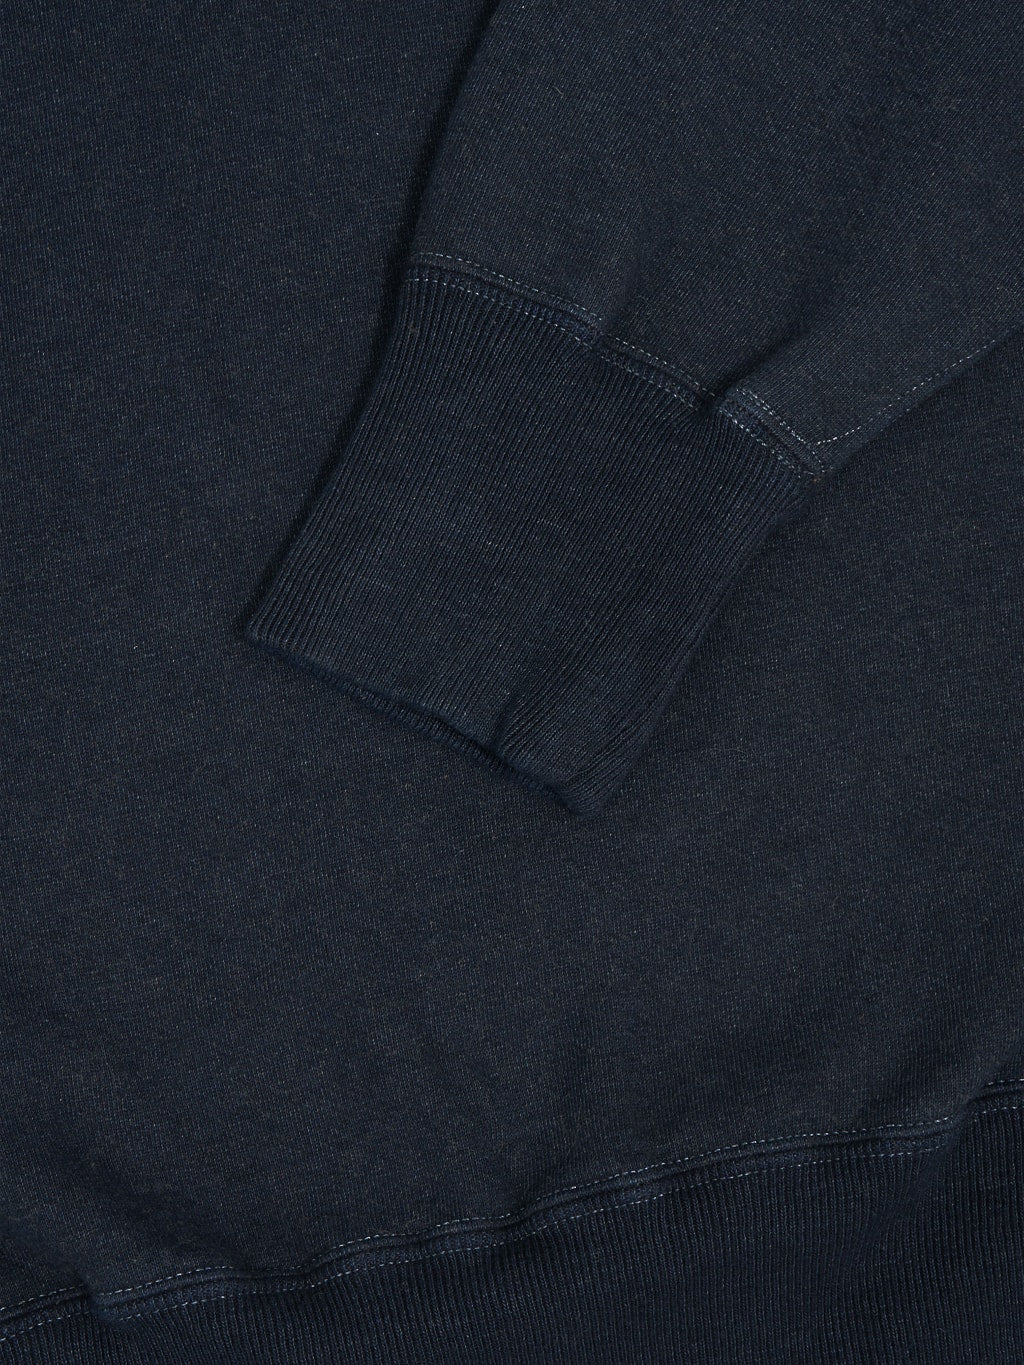 studio dartisan aishibu dyed indigo sweatshirt cuff closeup